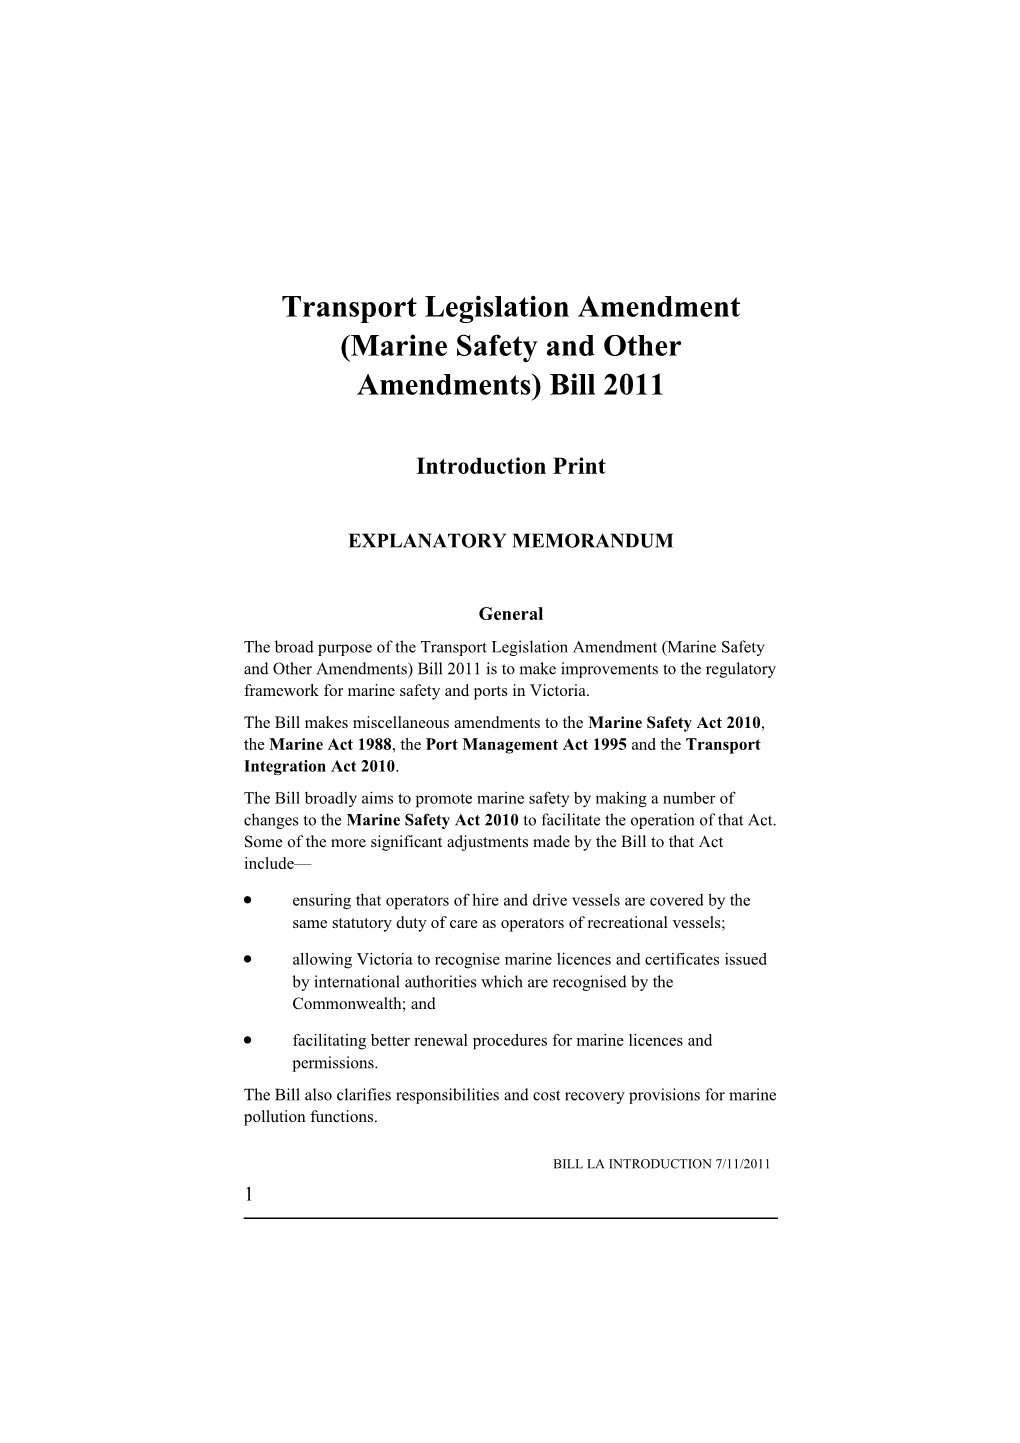 Transport Legislation Amendment (Marine Safety and Other Amendments) Bill 2011